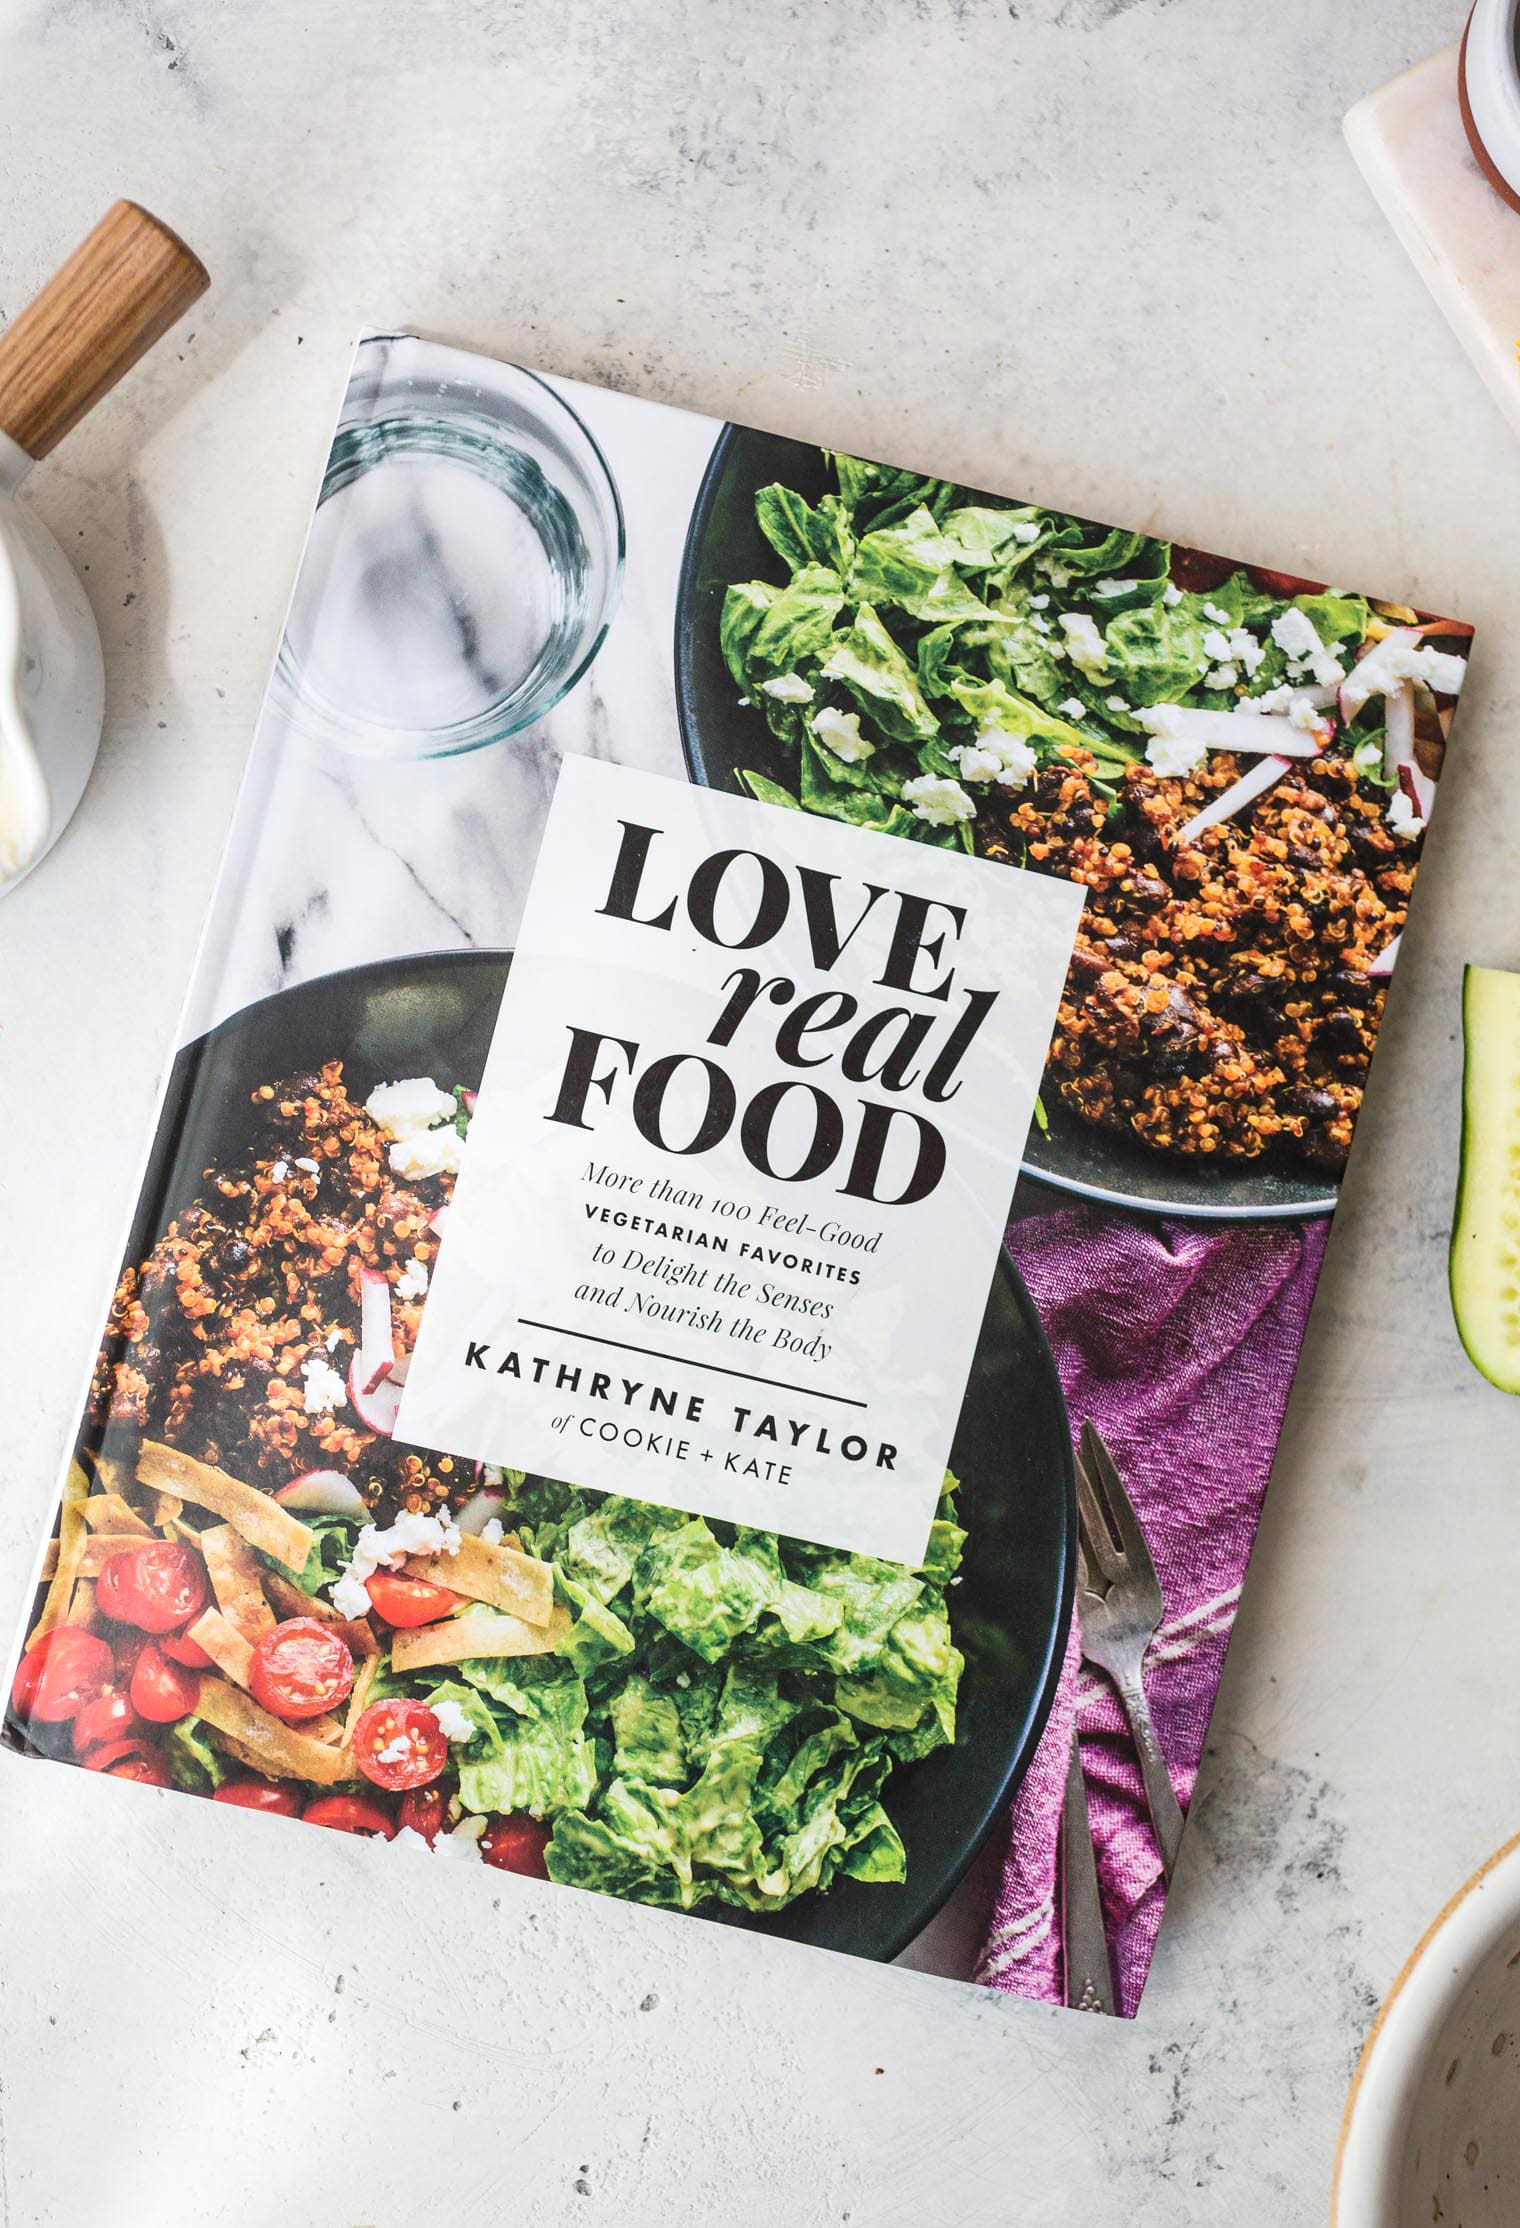 Love Read Food cookbook on countertop